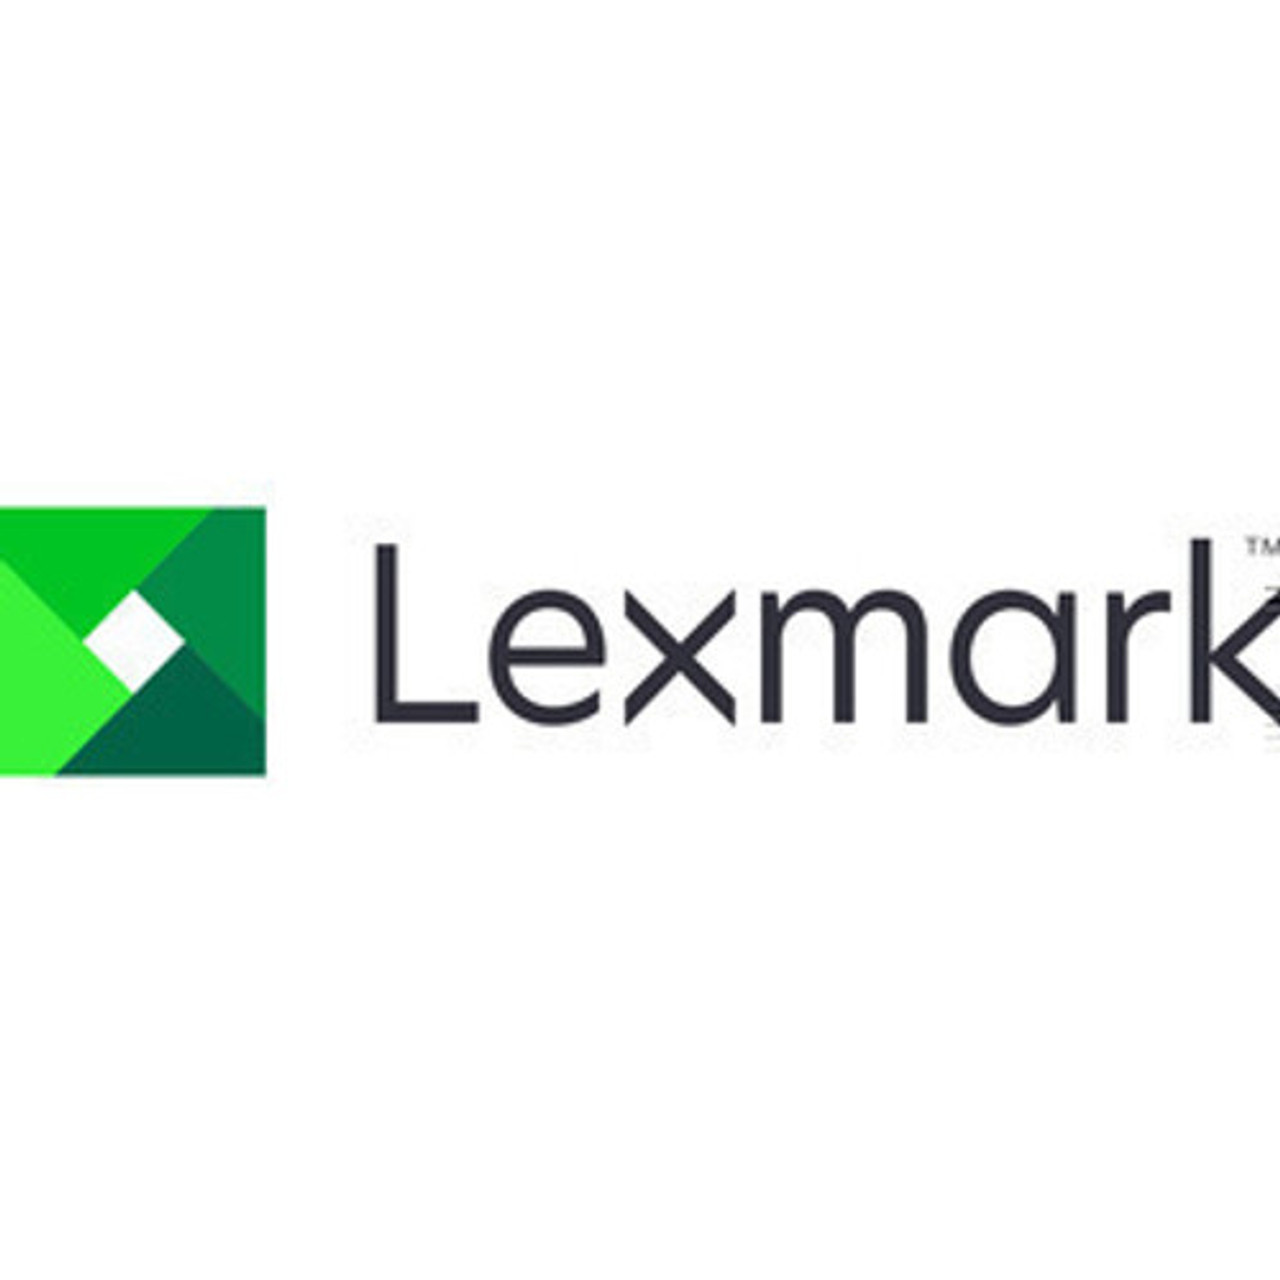 Lexmark 500 GB Hard Drive - 27X0805